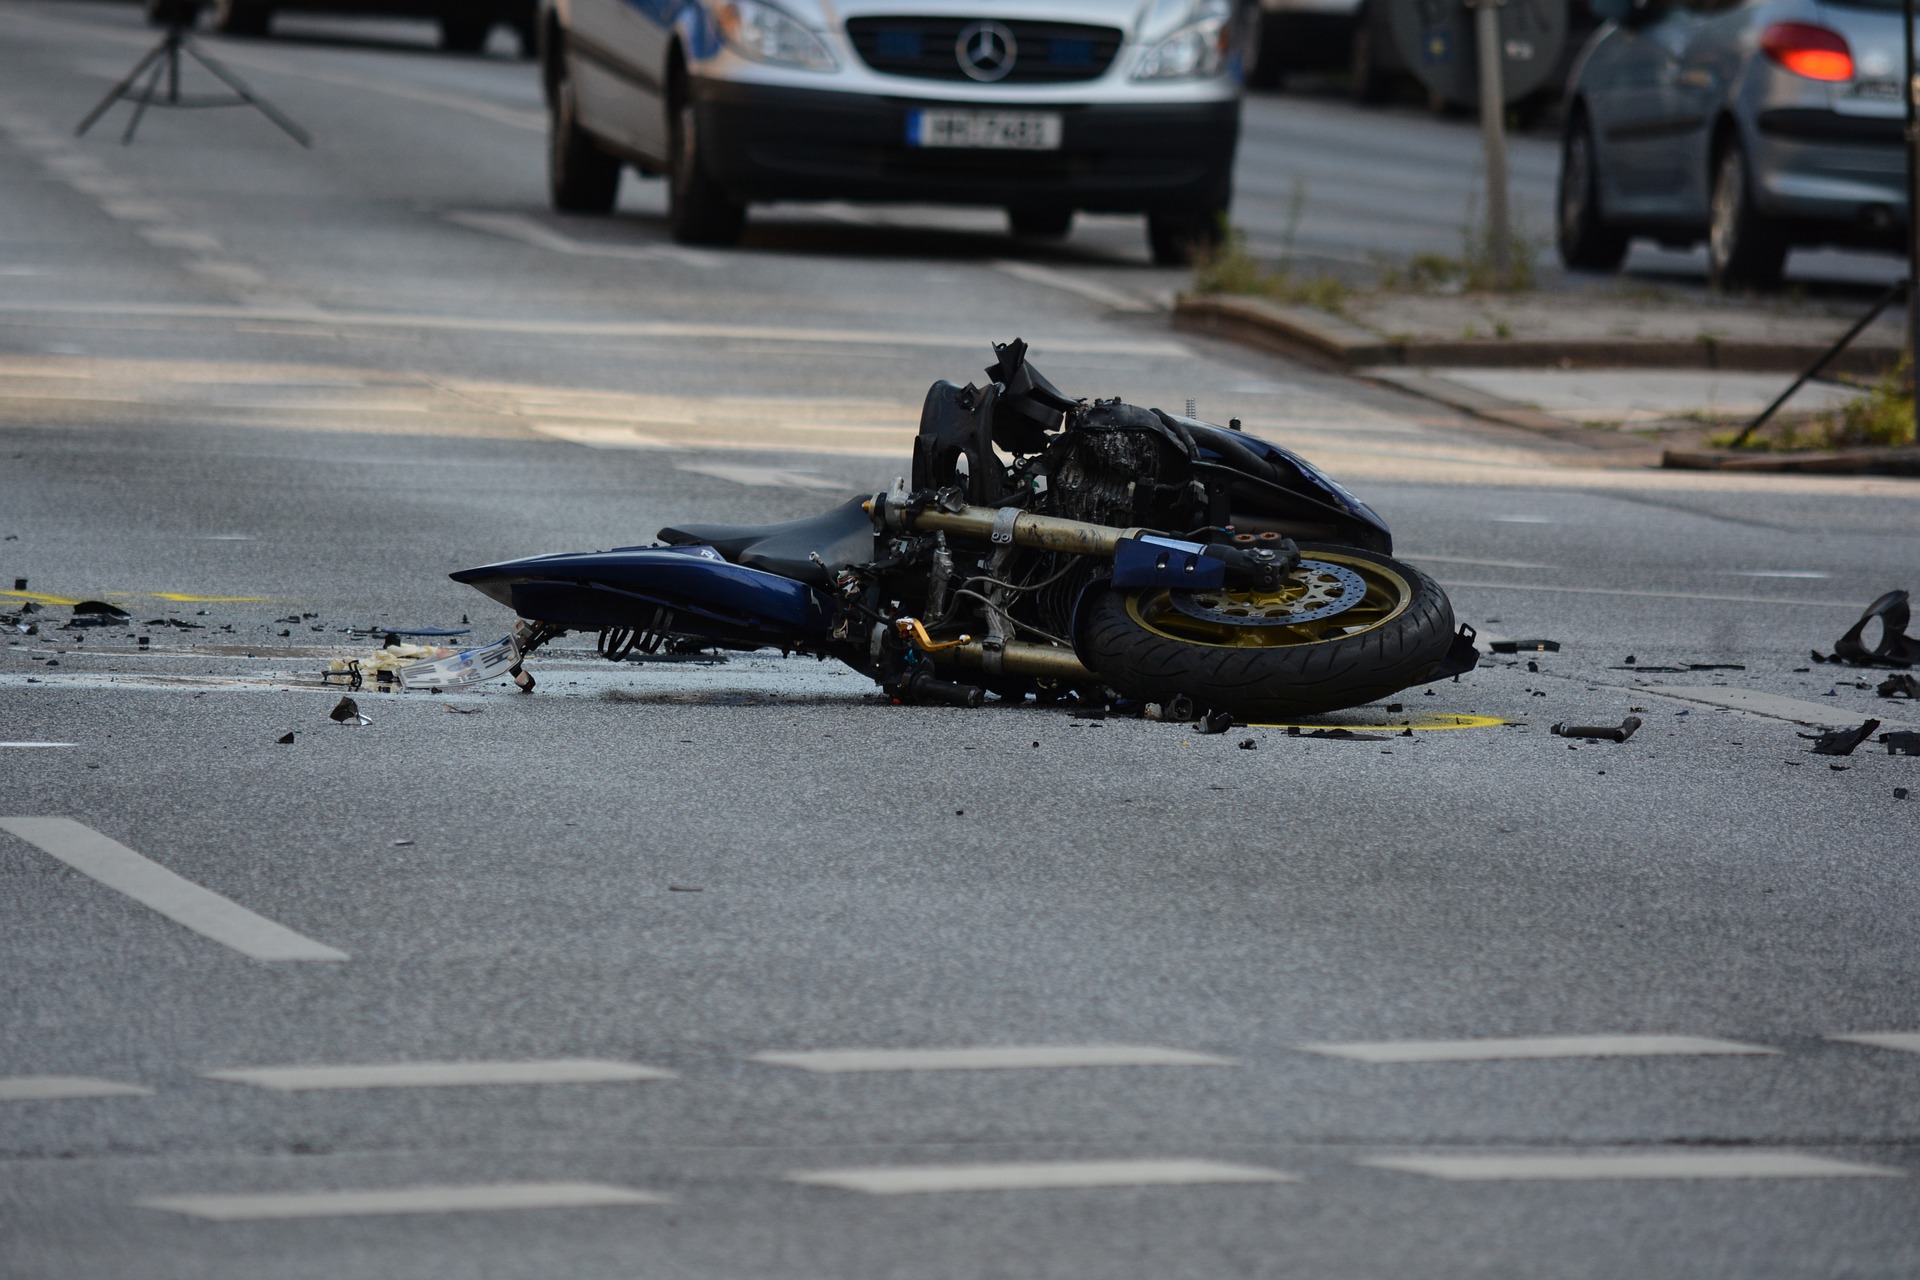 Motocross Crash Accident